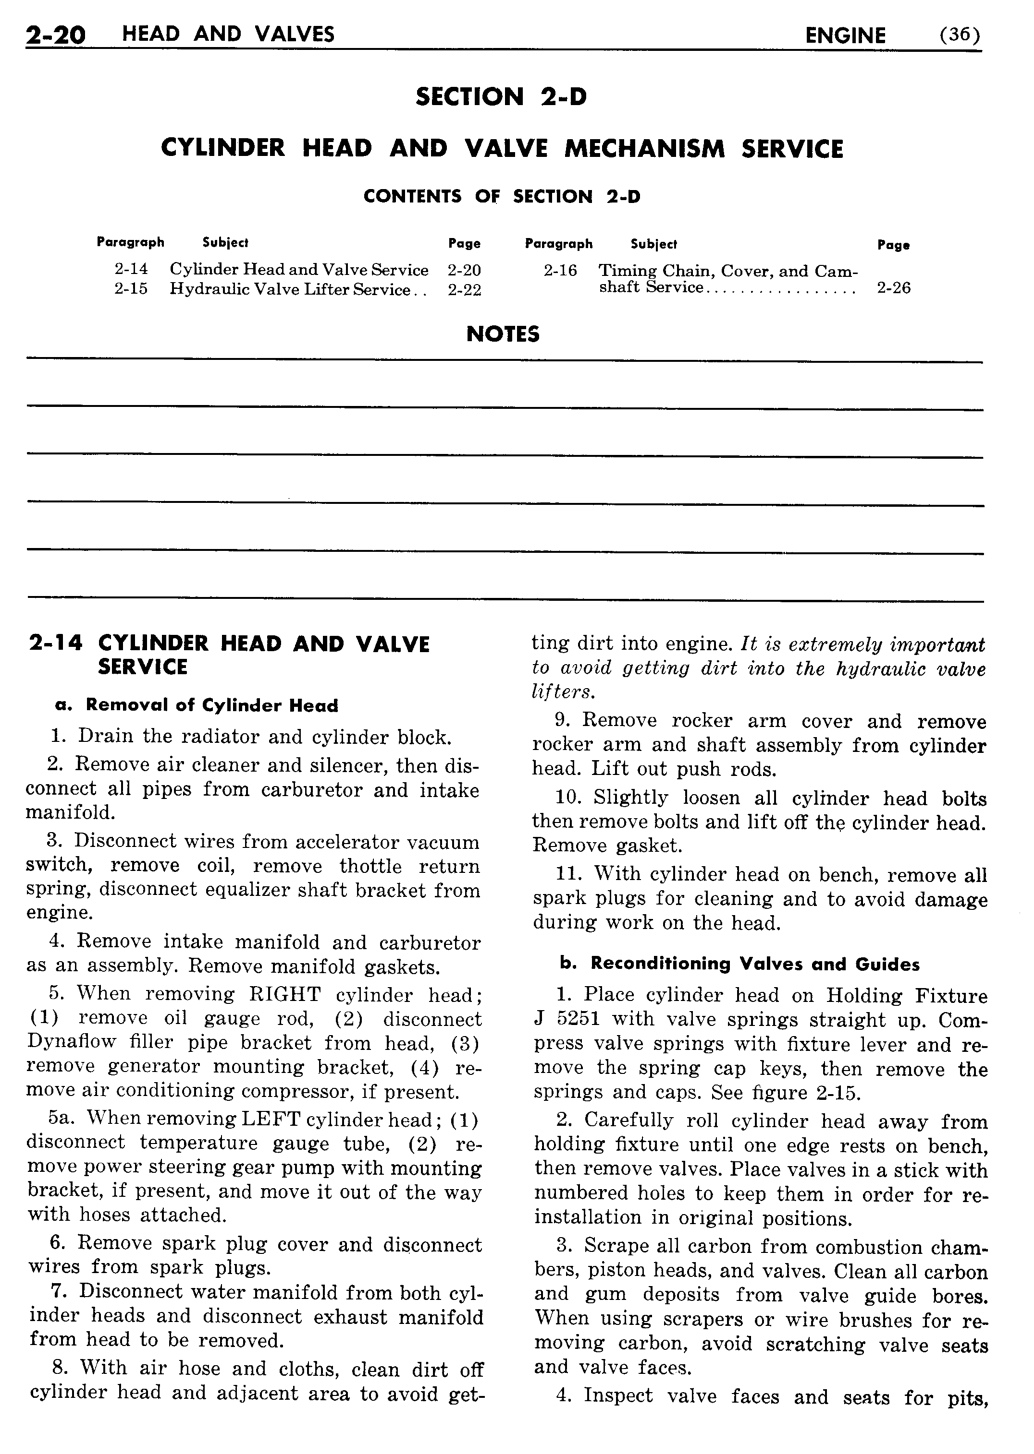 n_03 1956 Buick Shop Manual - Engine-020-020.jpg